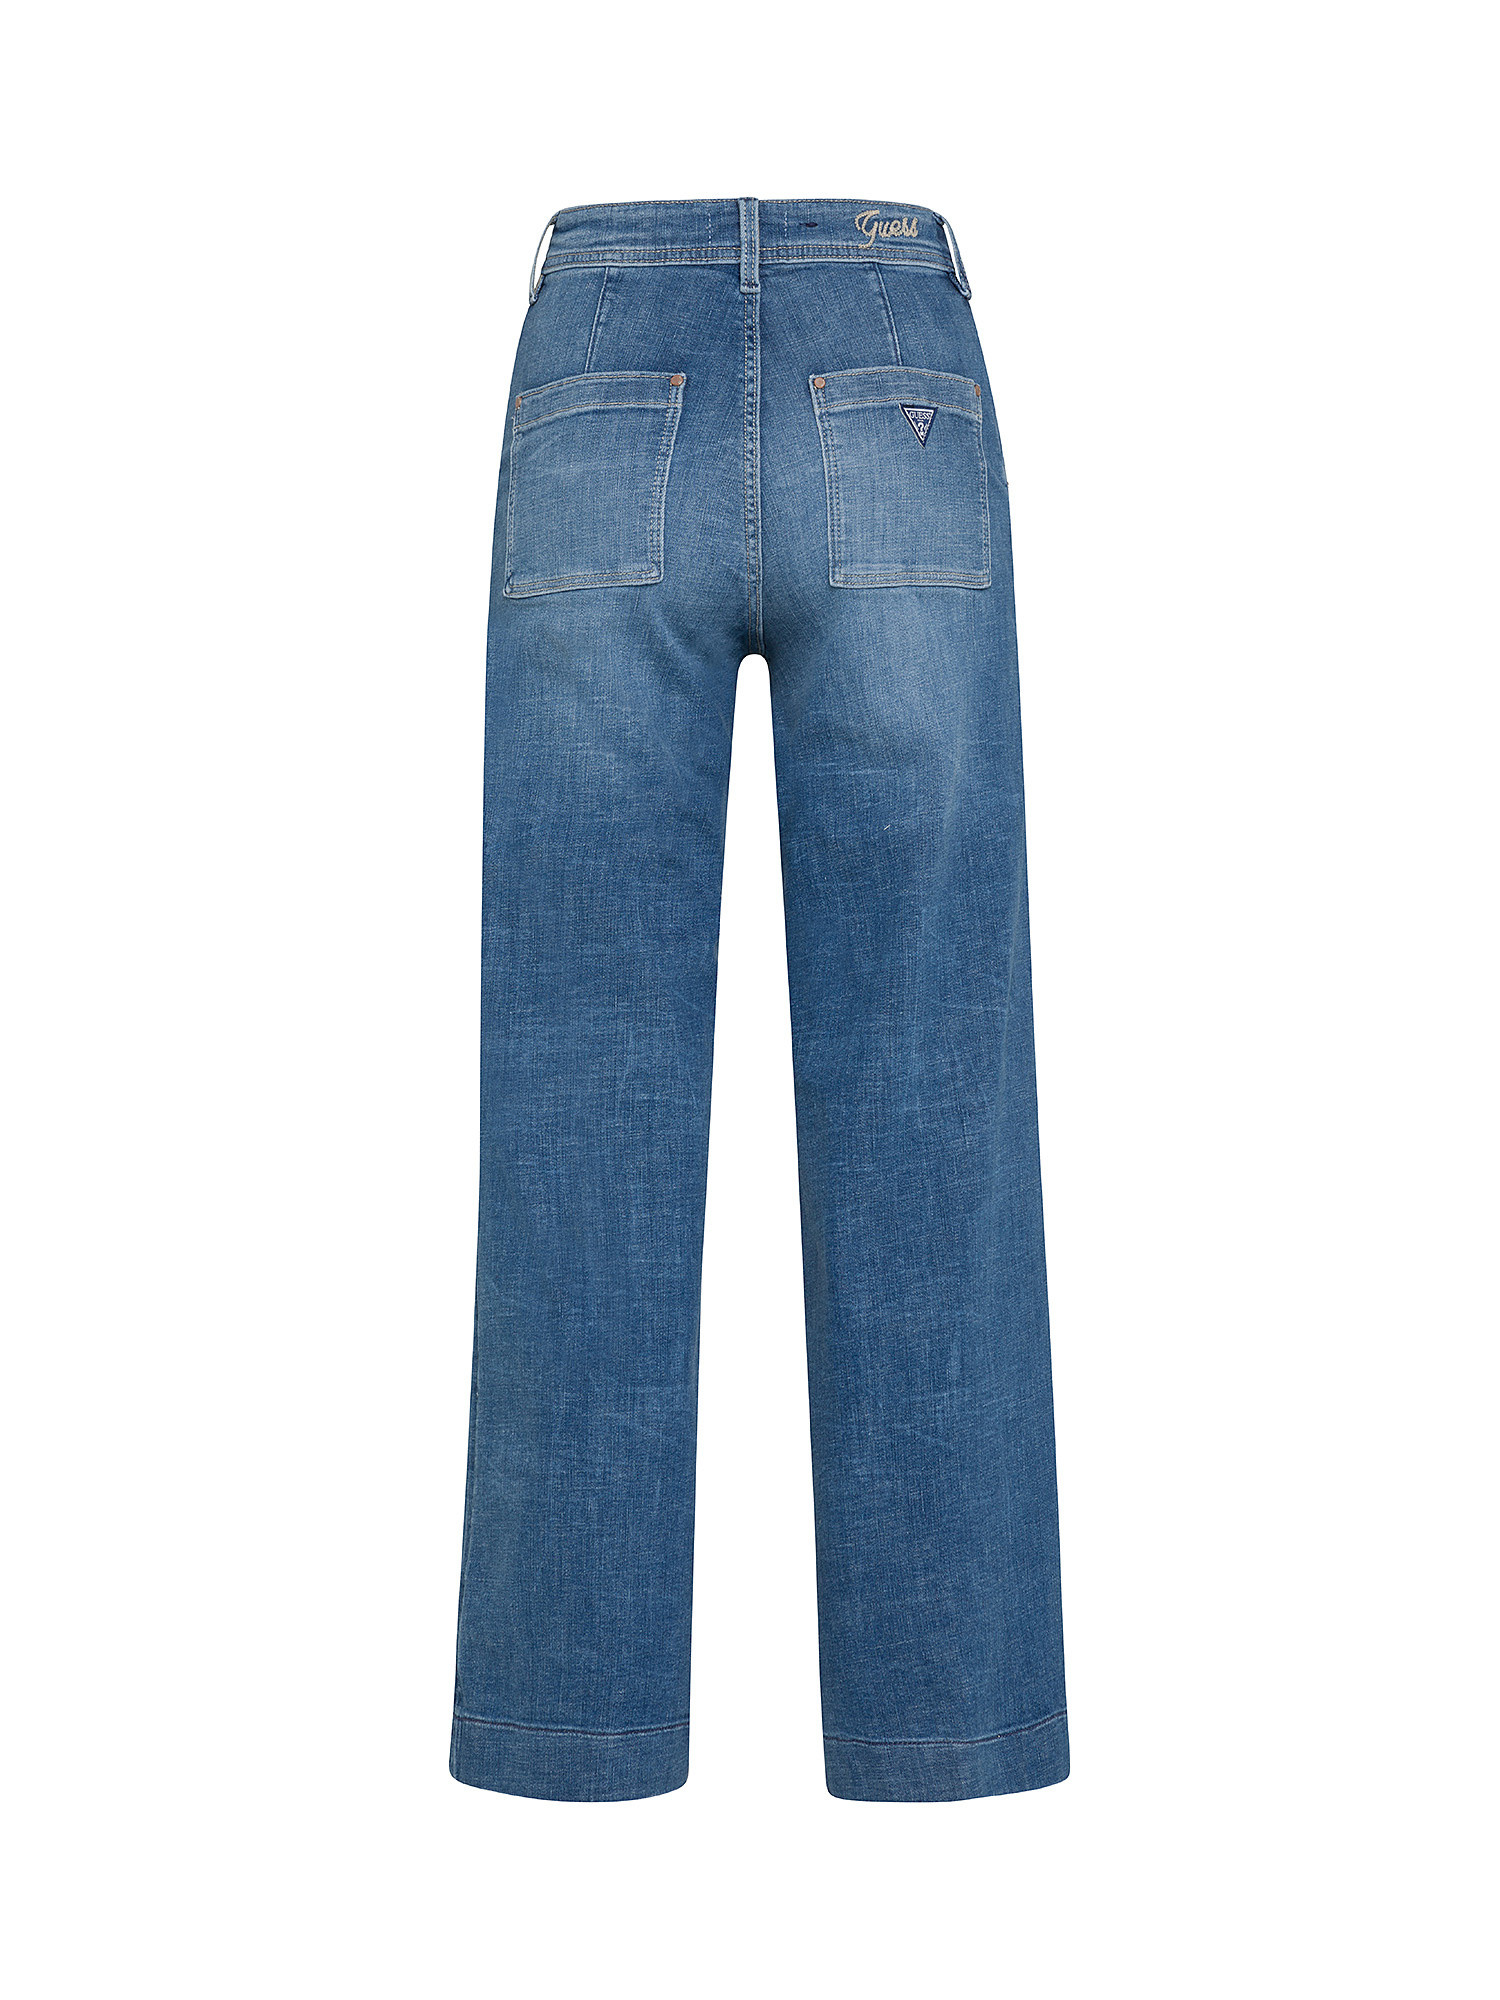 GUESS - Jeans wide leg a vita alta, Denim, large image number 1